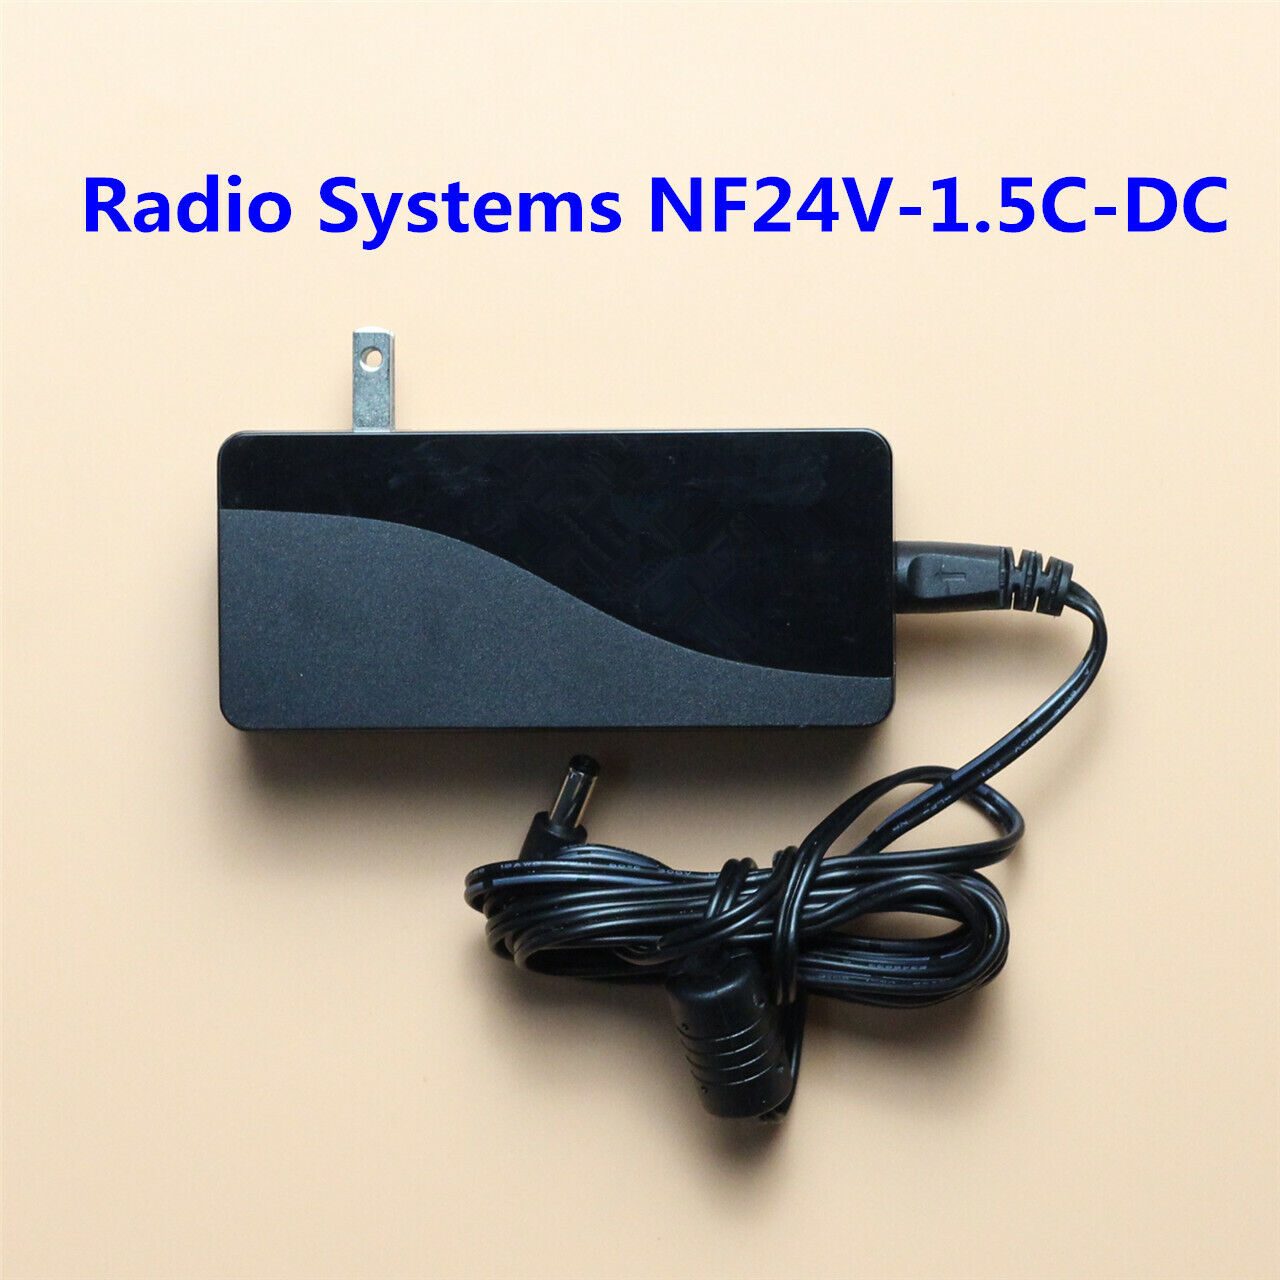 *Brand NEW*Genuine Radio Systems 650-627 AC Adapter Power Supply PetSafe NF24V-1.5C-DC